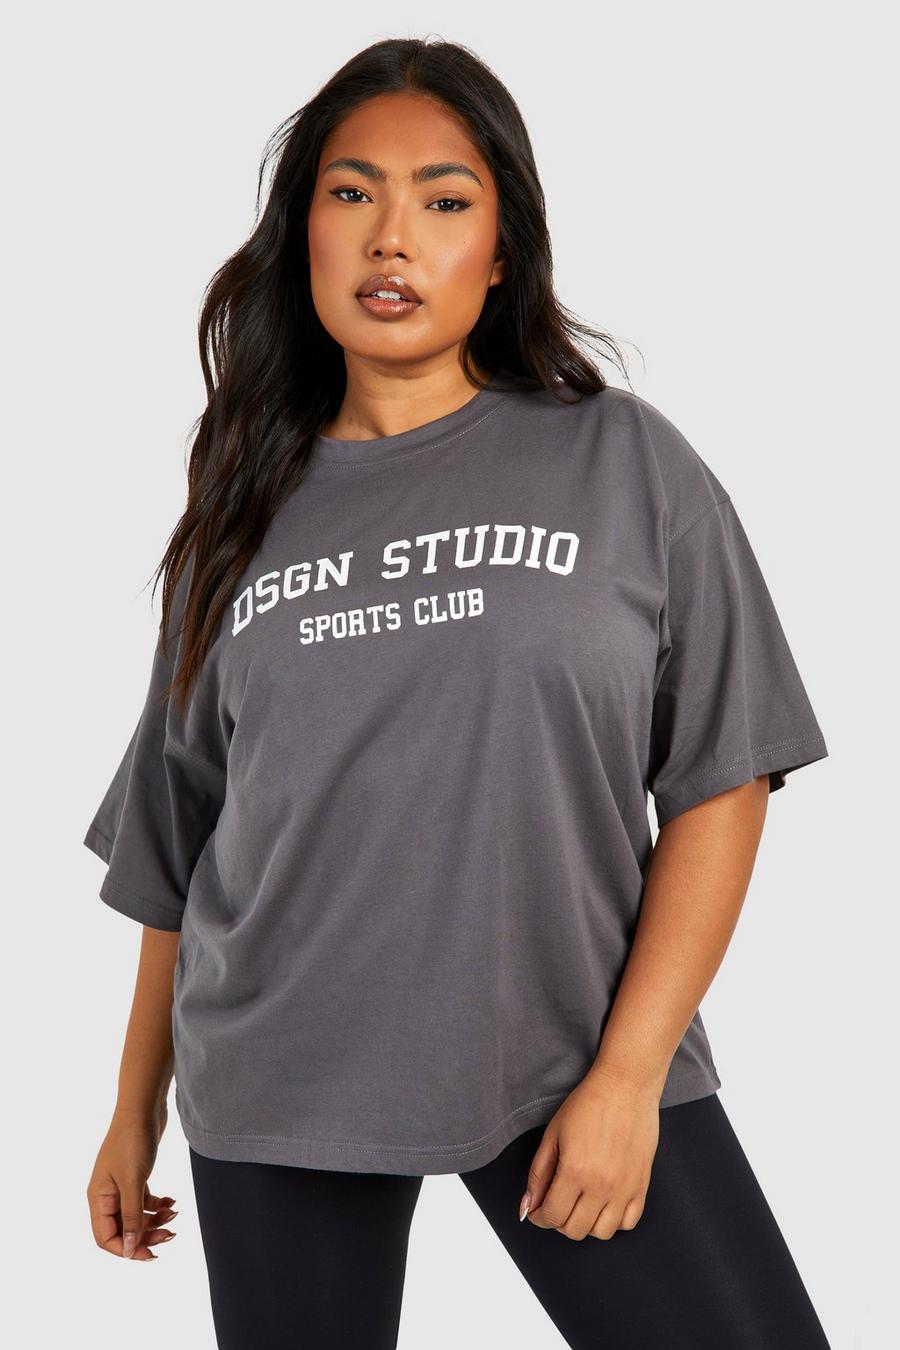 Charcoal Plus Dsgn Studio Sports Club Oversize t-shirt image number 1